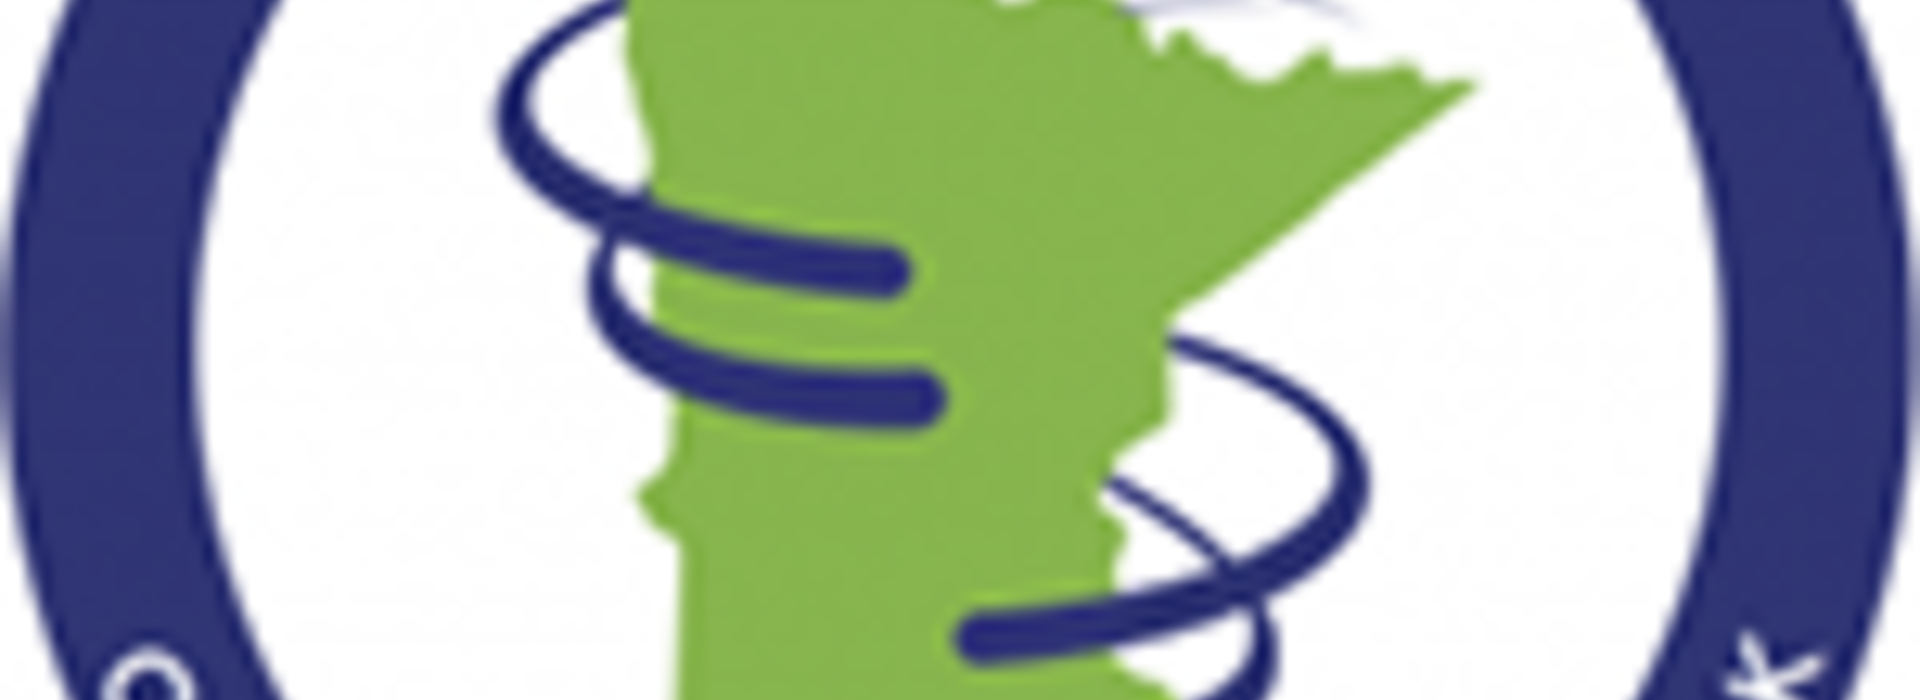 The Minnesota Cancer Clinical Trials Network logo